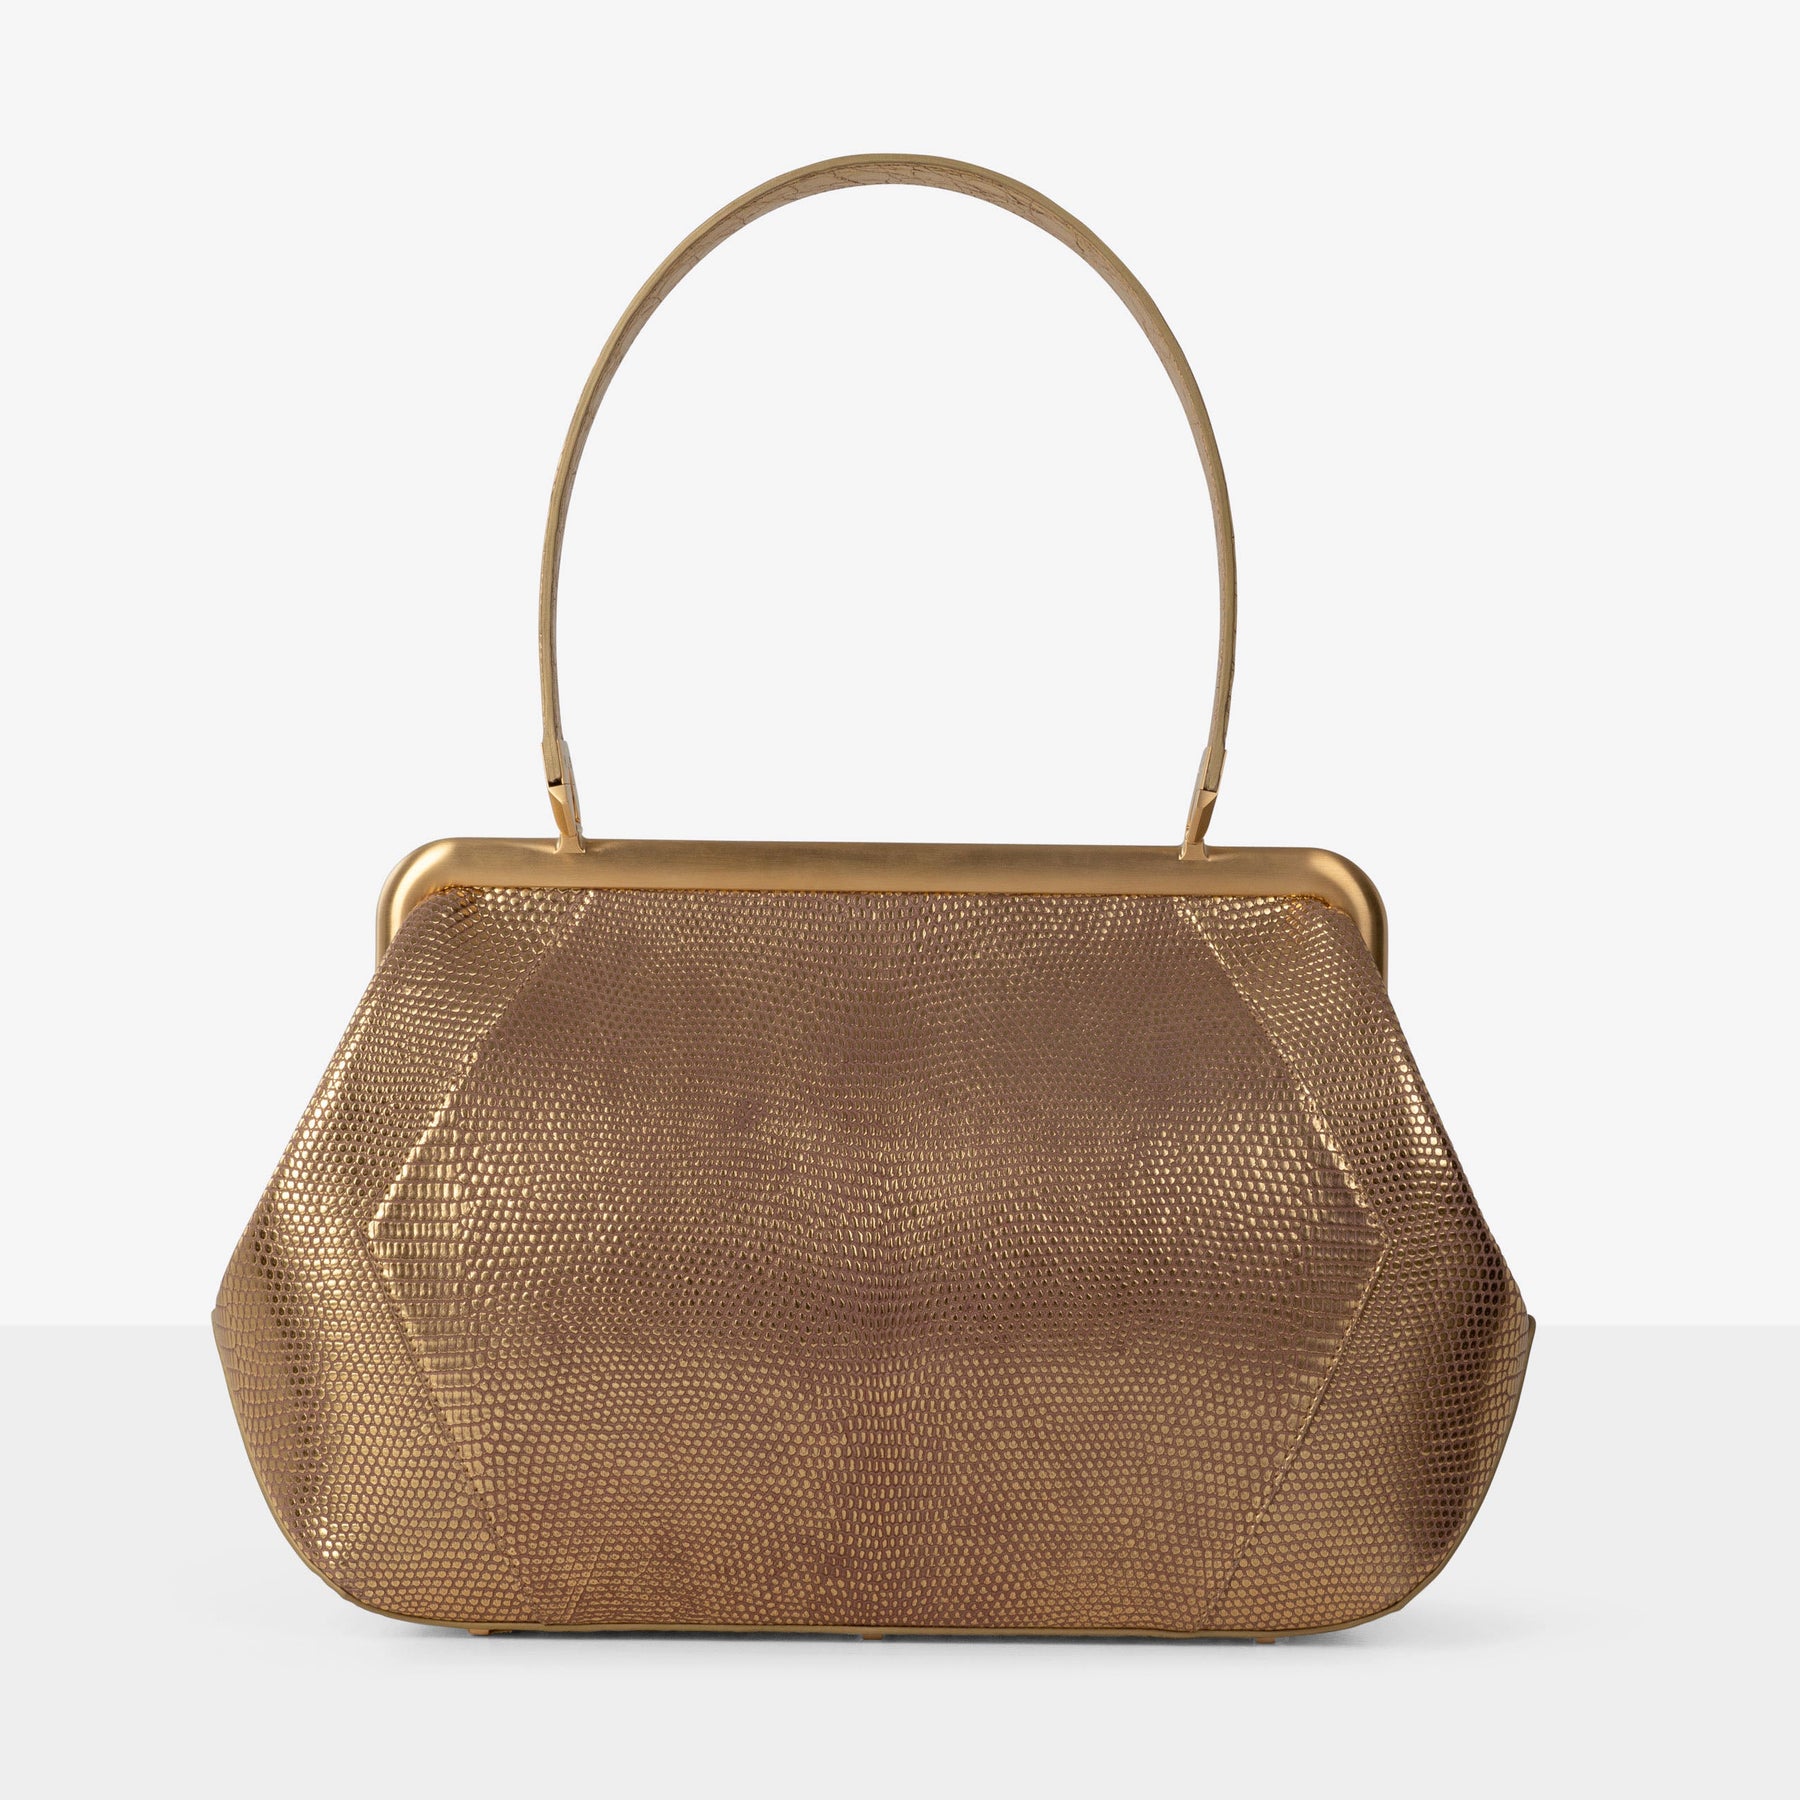 DOTTI Luna in Gold Lizard and Alligator, Luxury Handbags.Made in Italy